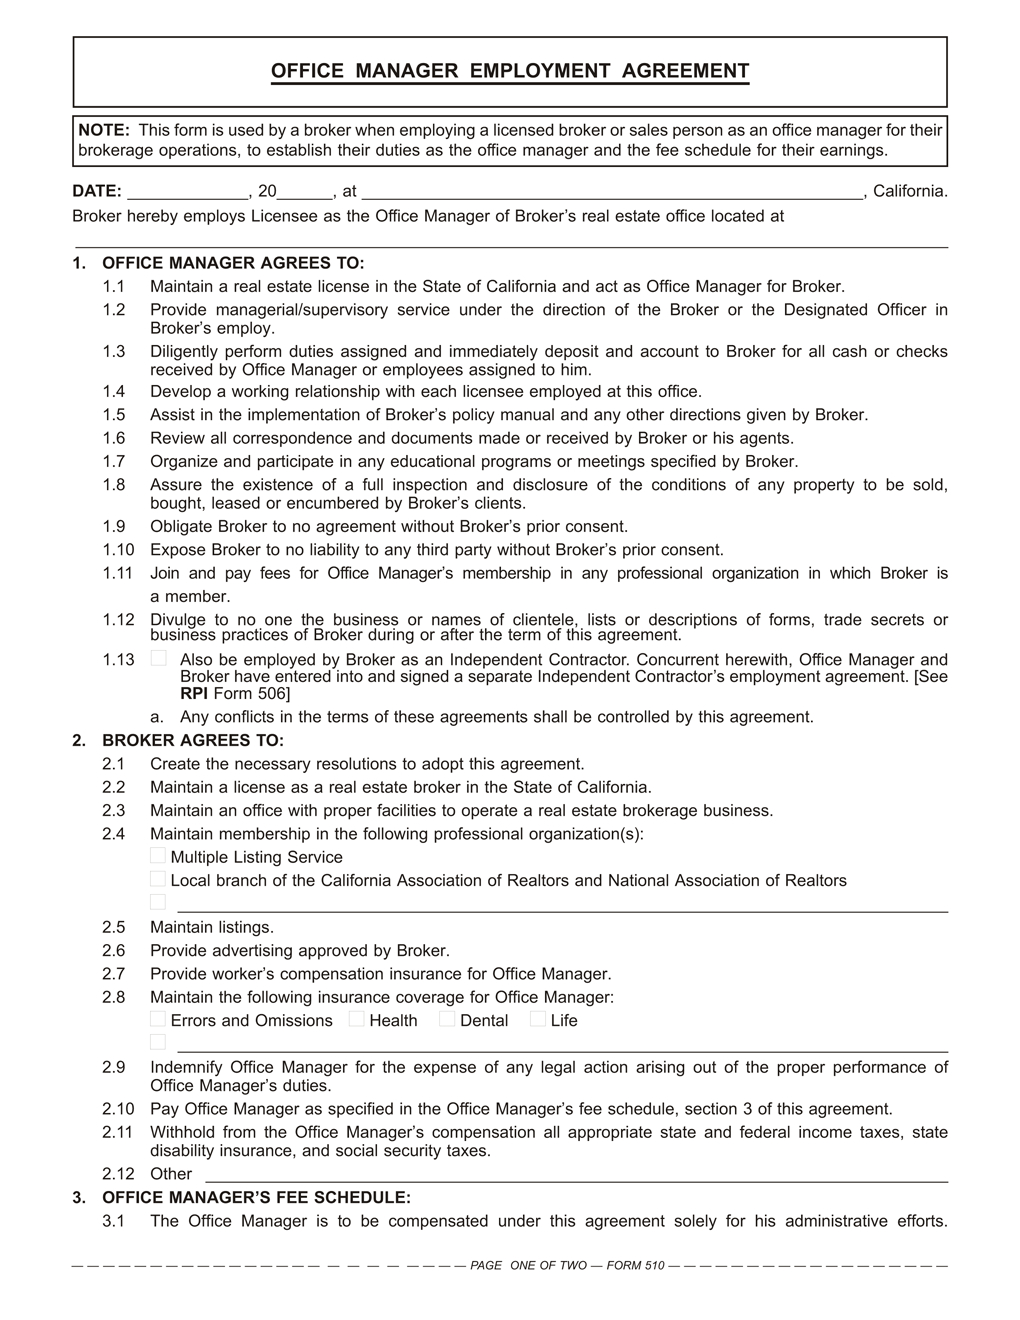 Real Estate Broker Employment Agreement Office Manager Employment Agreement Rpi Form 510 First Tuesday